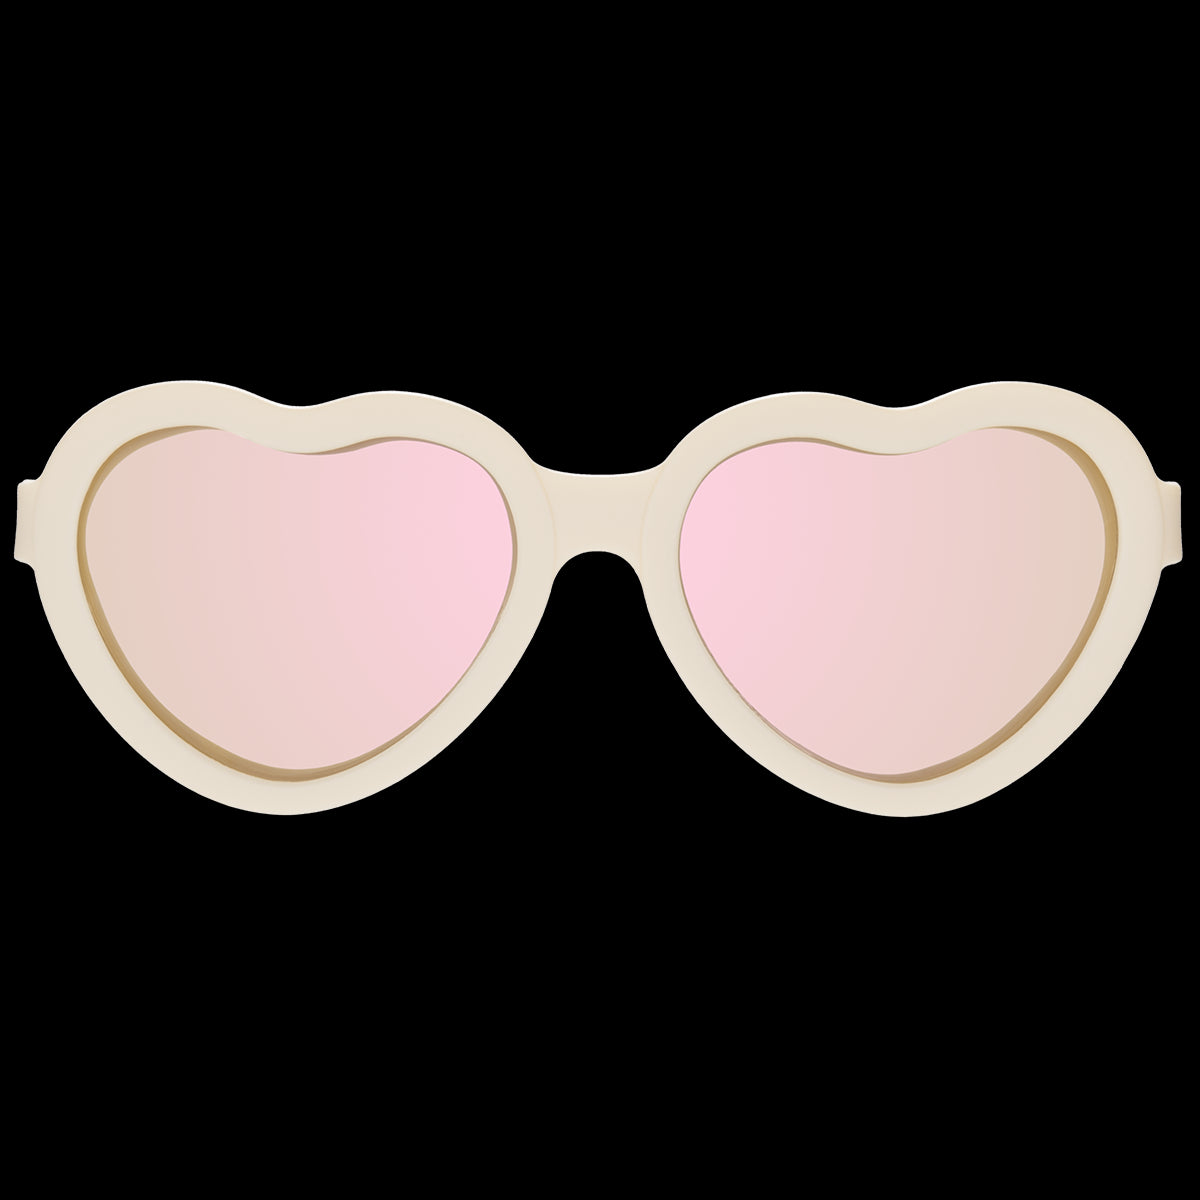 New Dark Pink Rose Gold Mirrored Polarized Sunglass Lenses for